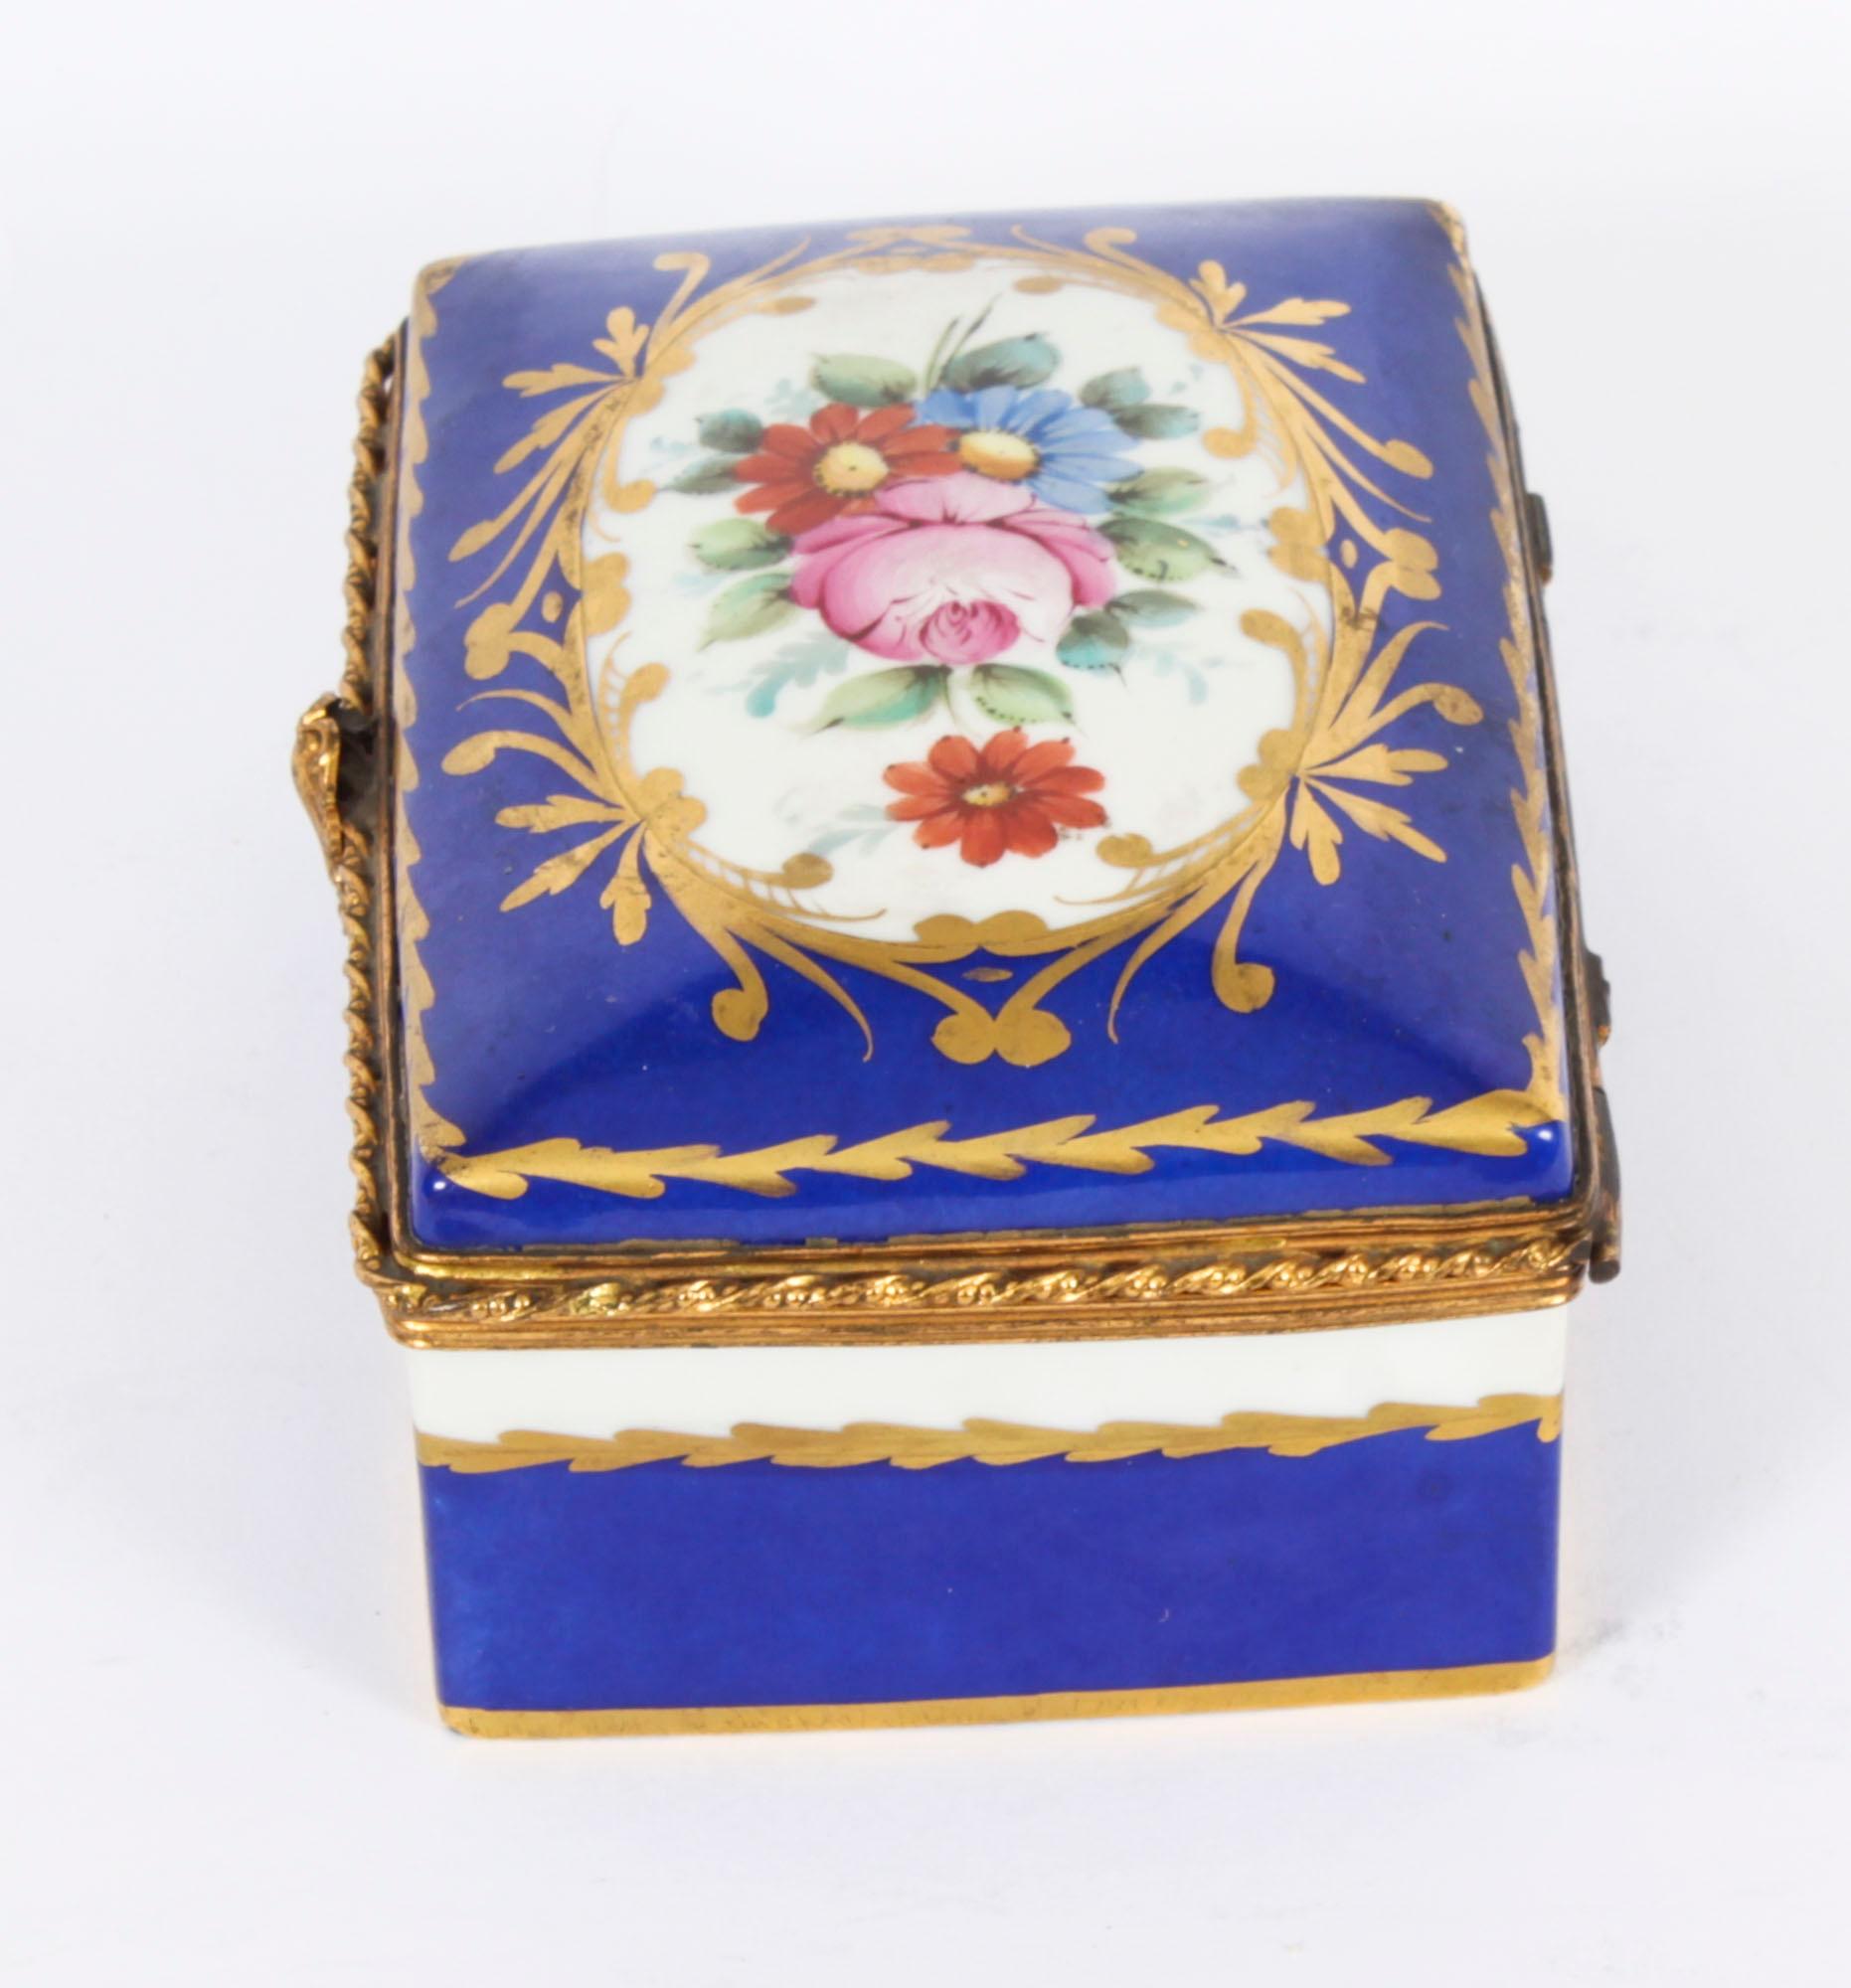 Antique Limoges Royal Blue Ormolu Mounted Casket Box 19h Century For Sale 2